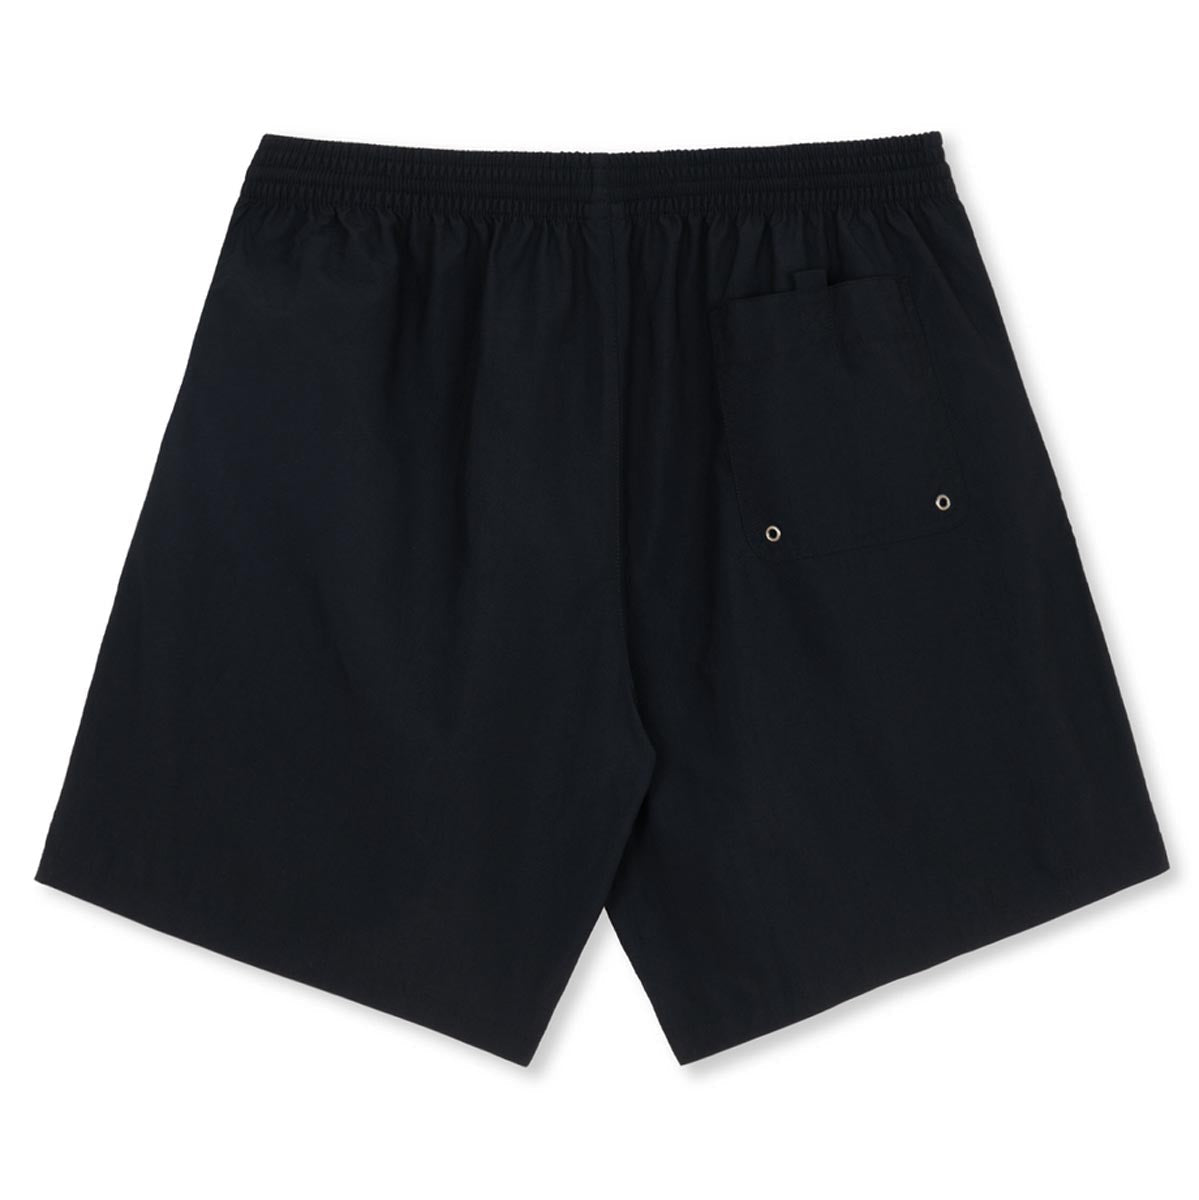 Polar Swim Square Stripe Shorts - Black/Jade Green image 2